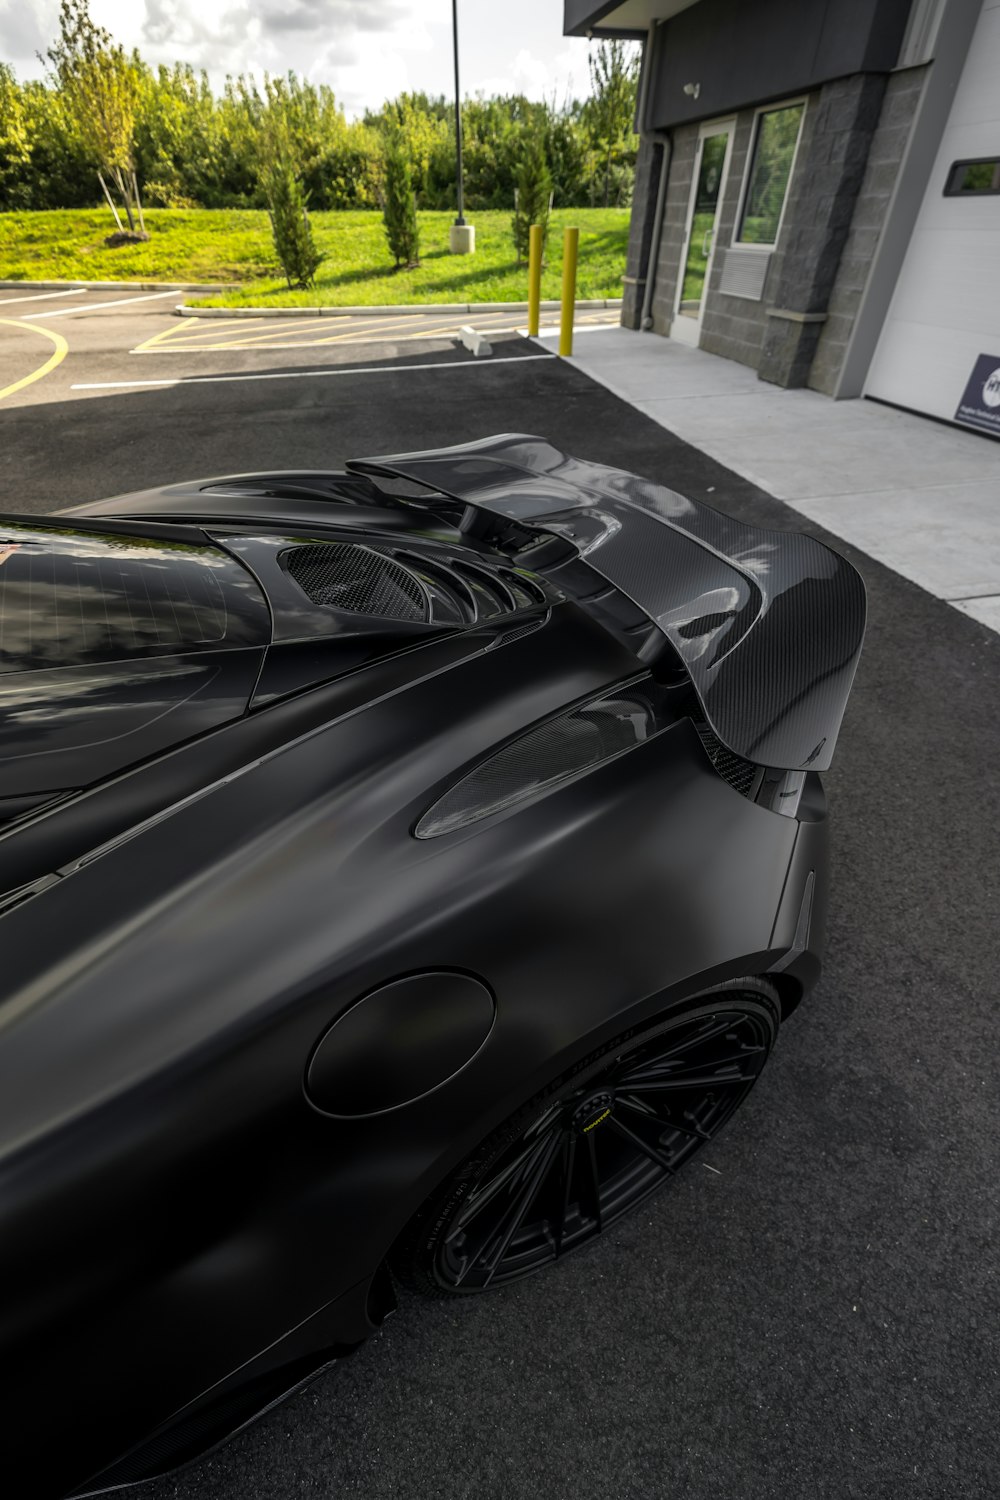 Un auto deportivo negro estacionado frente a un edificio